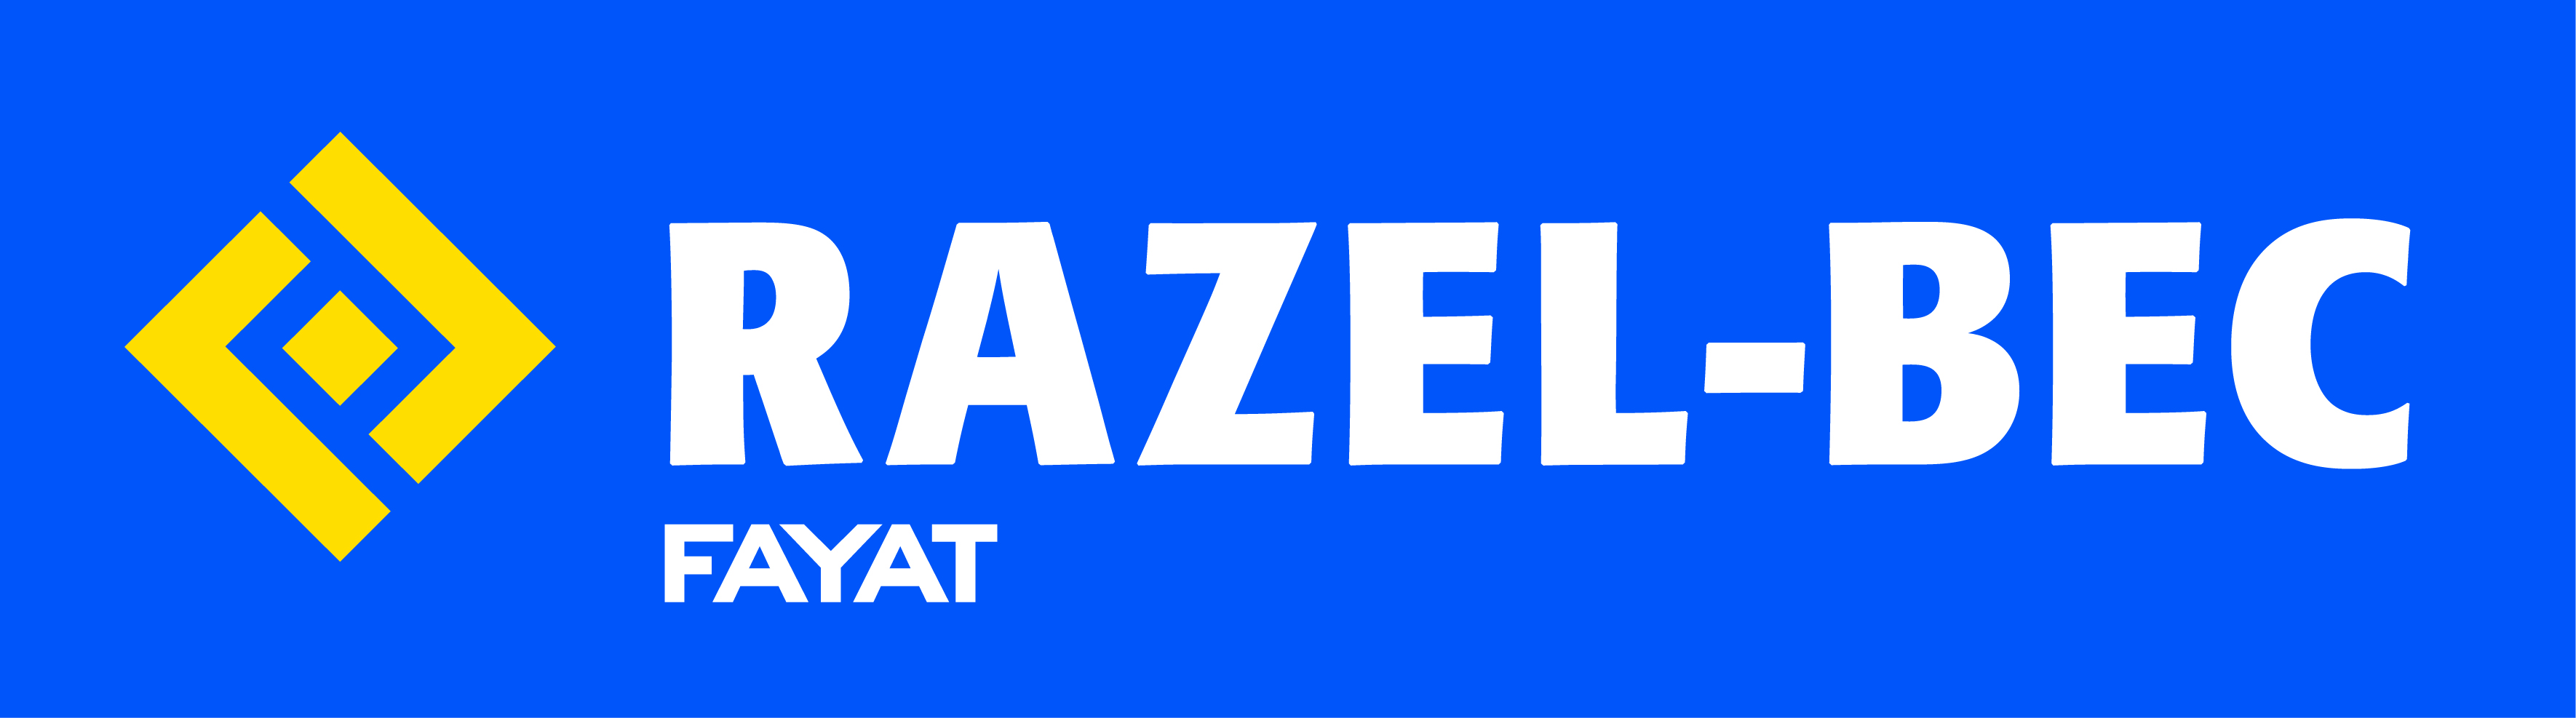 Logo RAZEL BEC HD